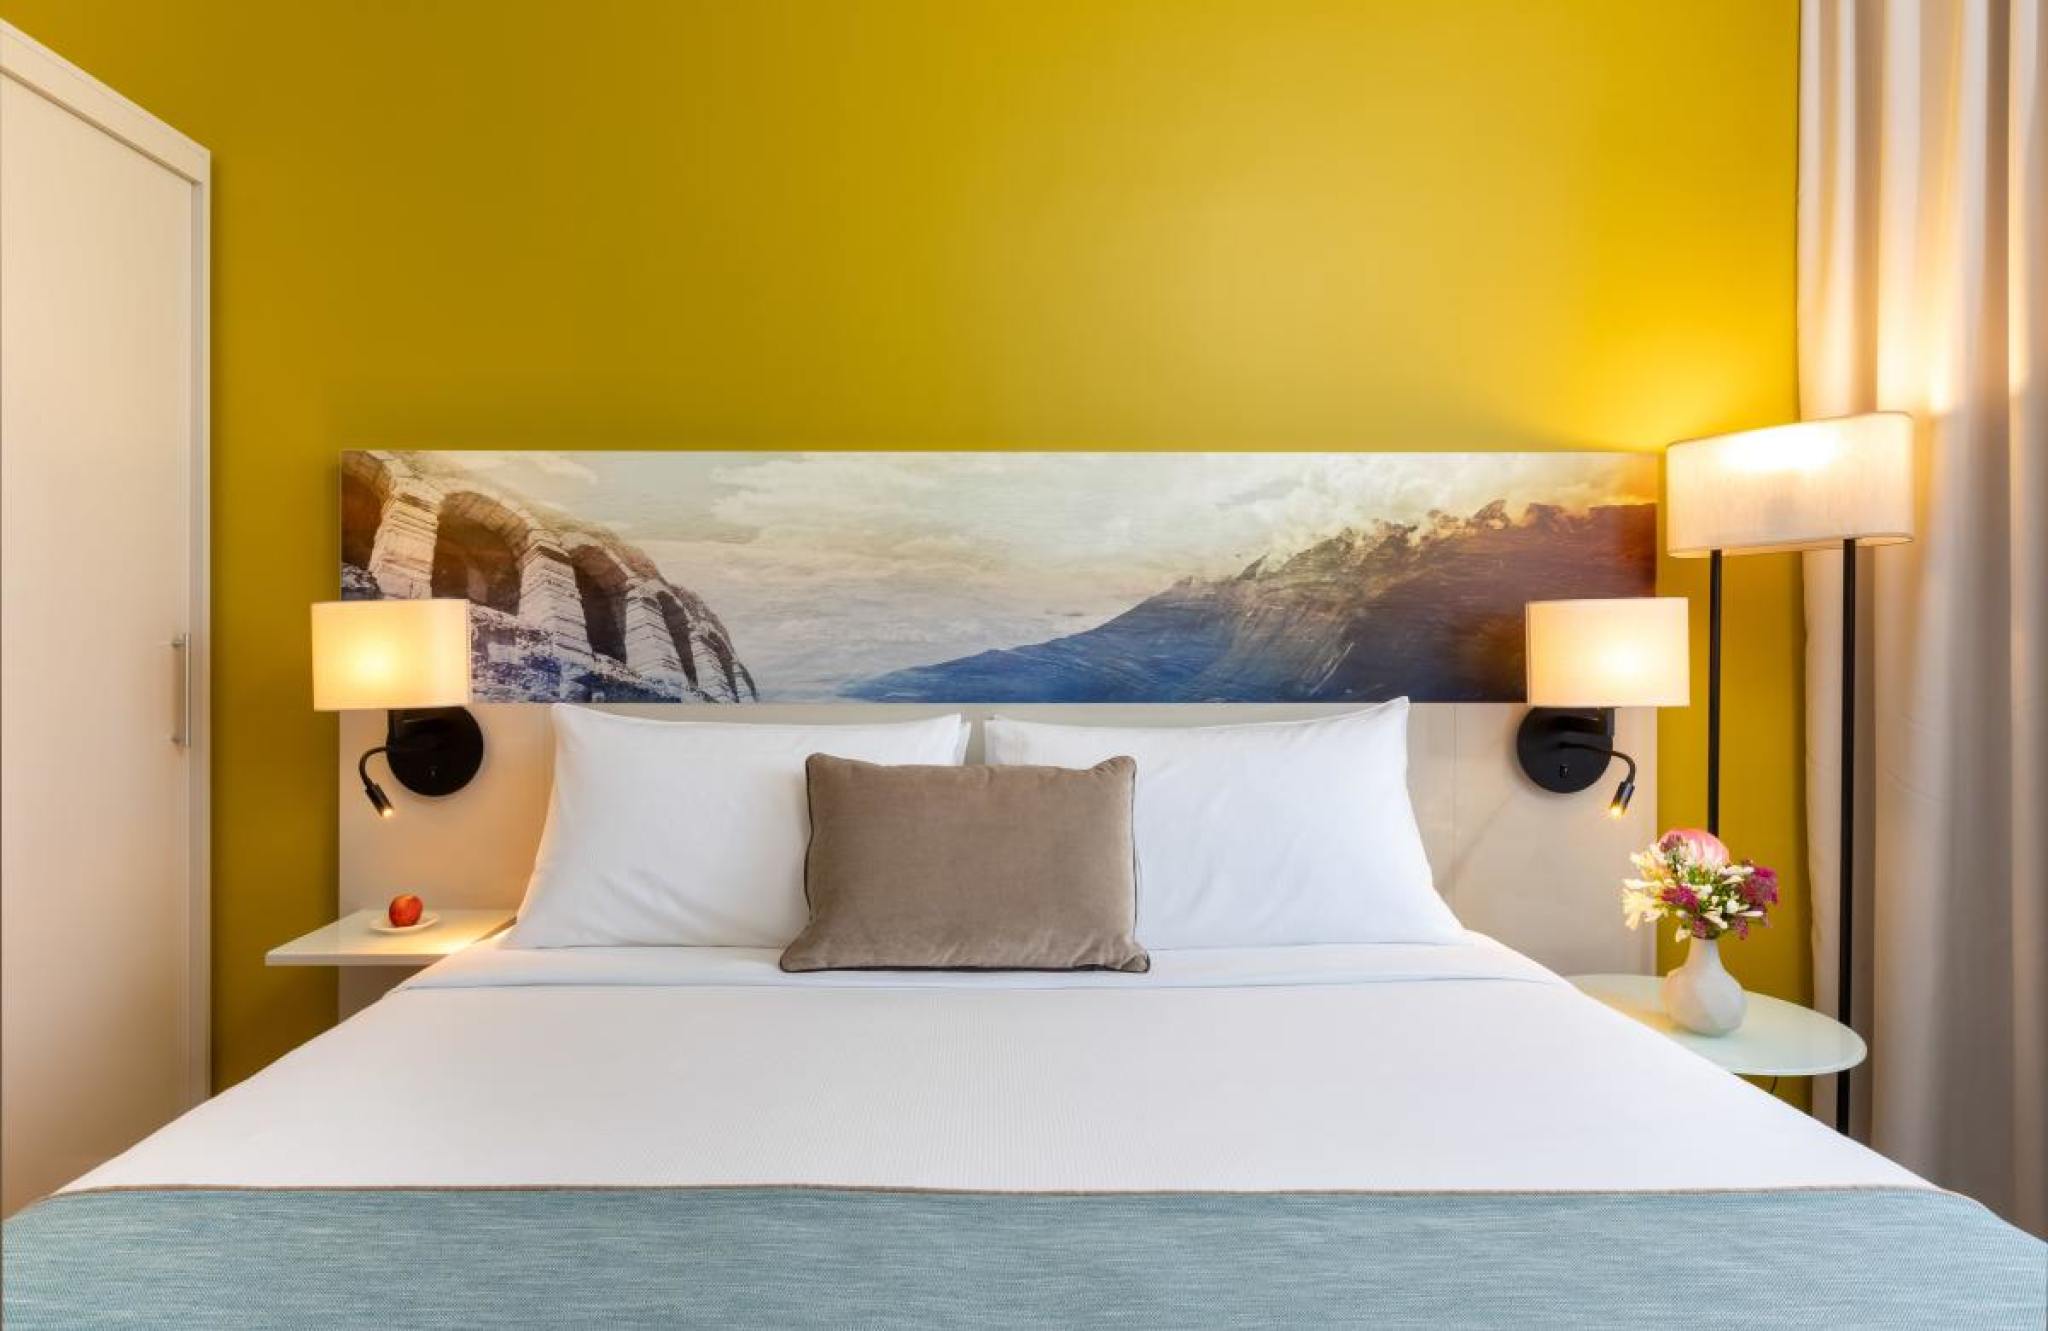 Leonardo Hotel Verona - Comfort Room